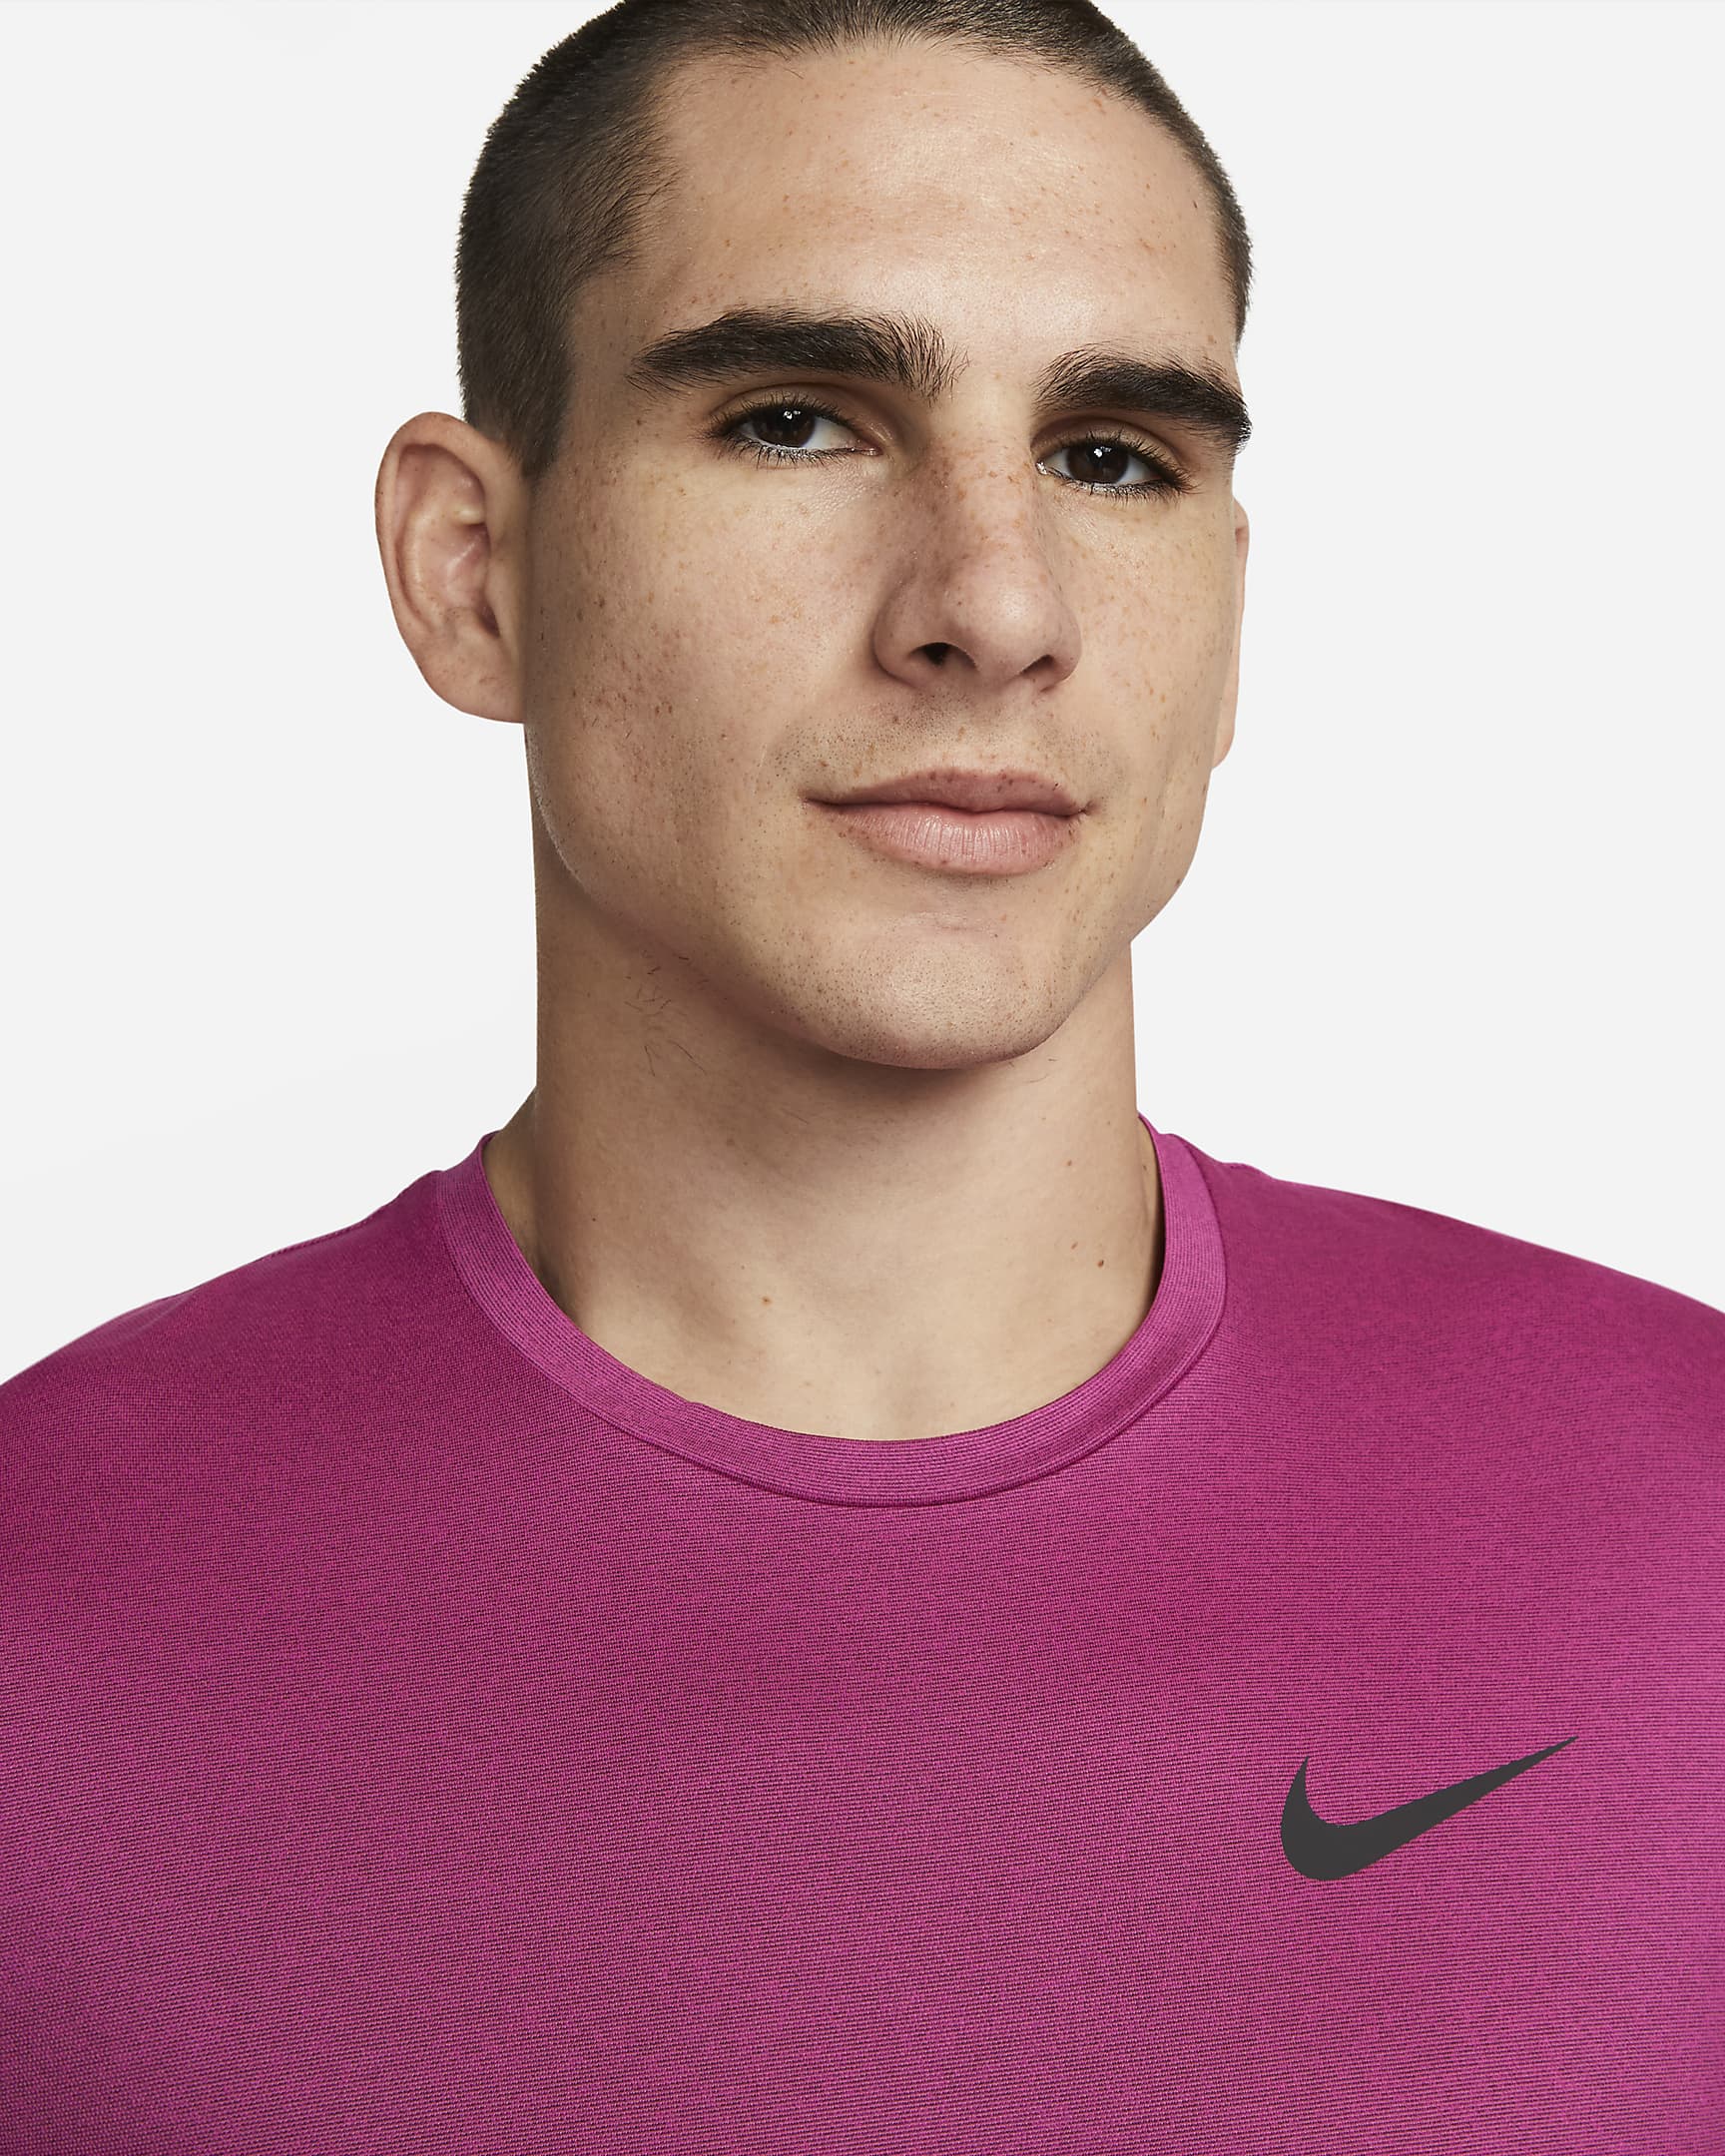 Nike Pro Dri-FIT Men's Short-Sleeve Top. Nike IE